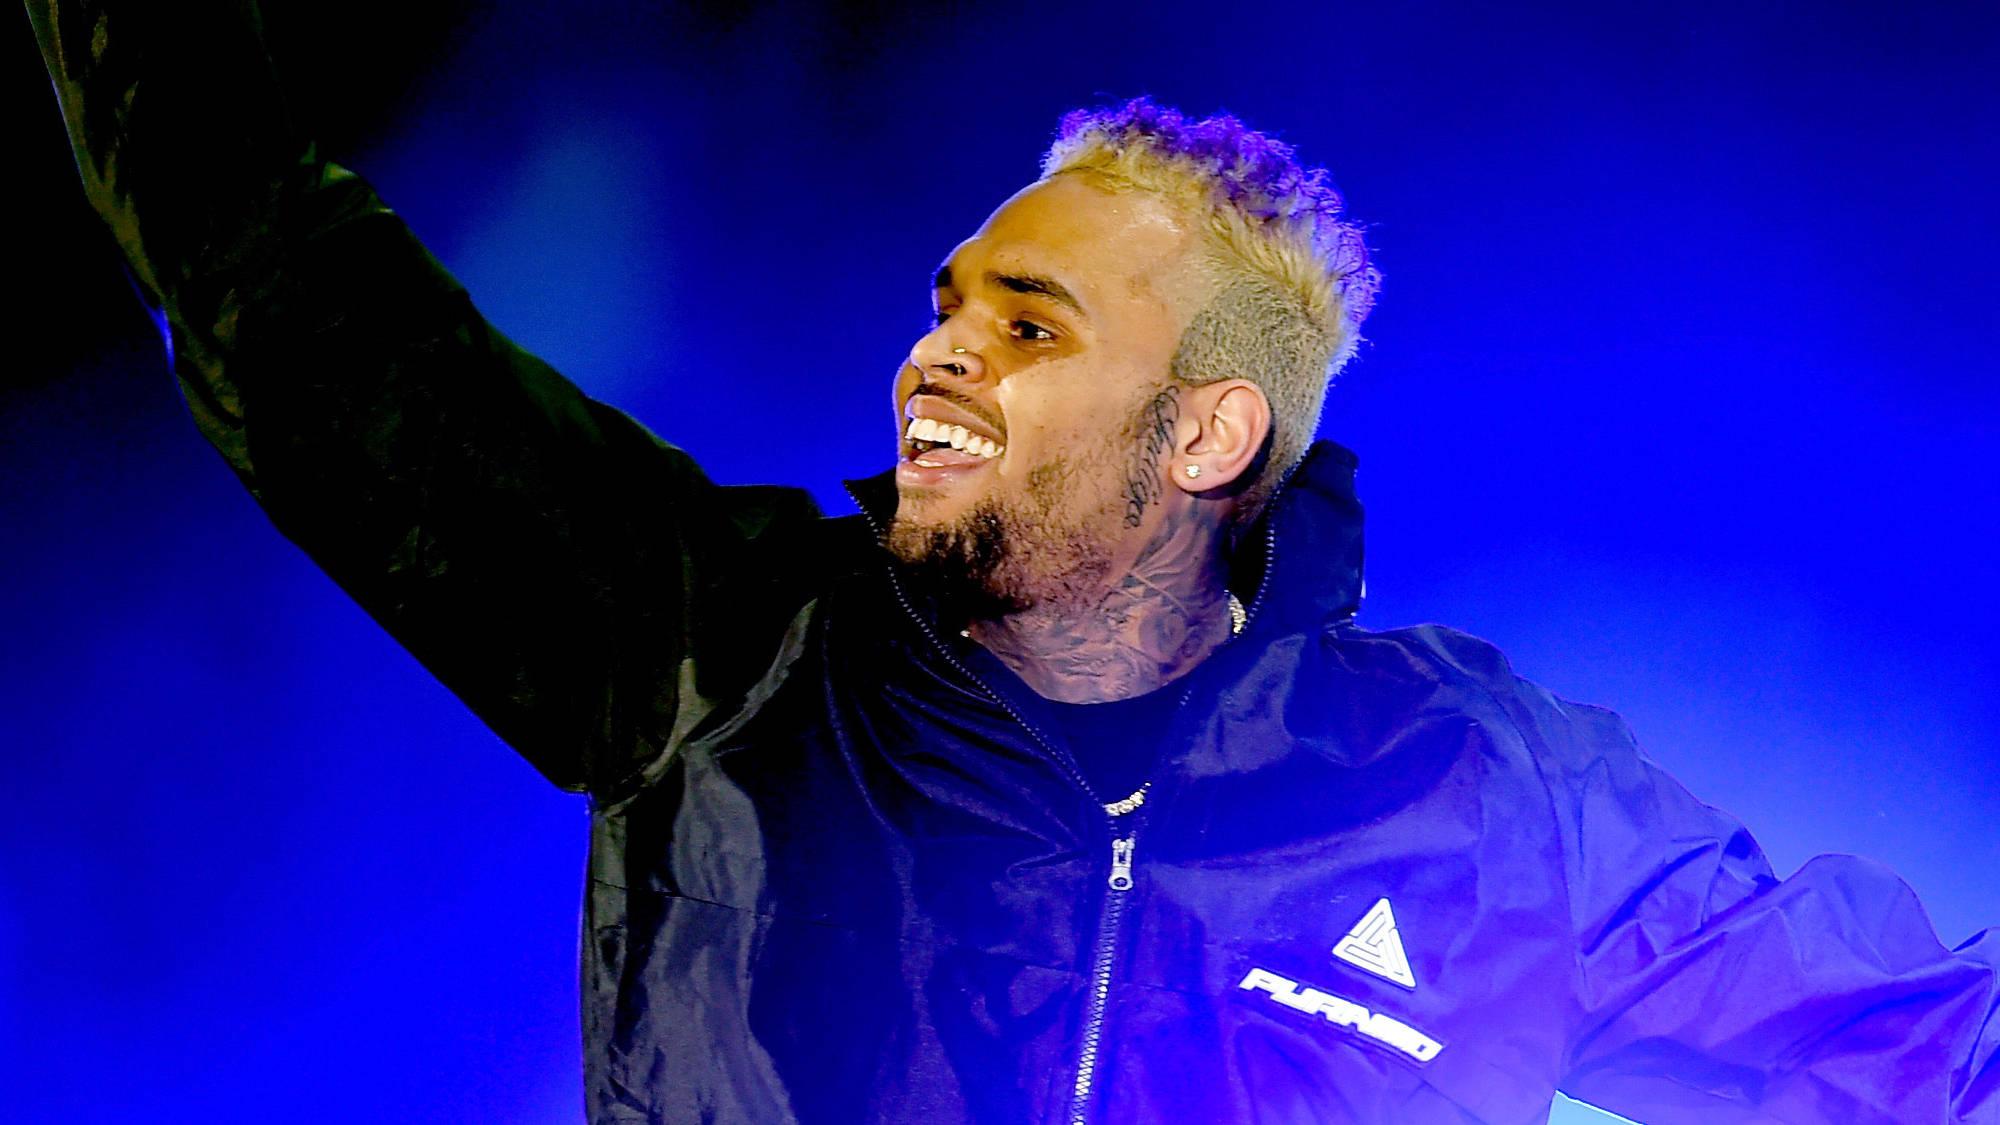 Chris Brown New Album 2019: Release Date, Songs, Tracklist